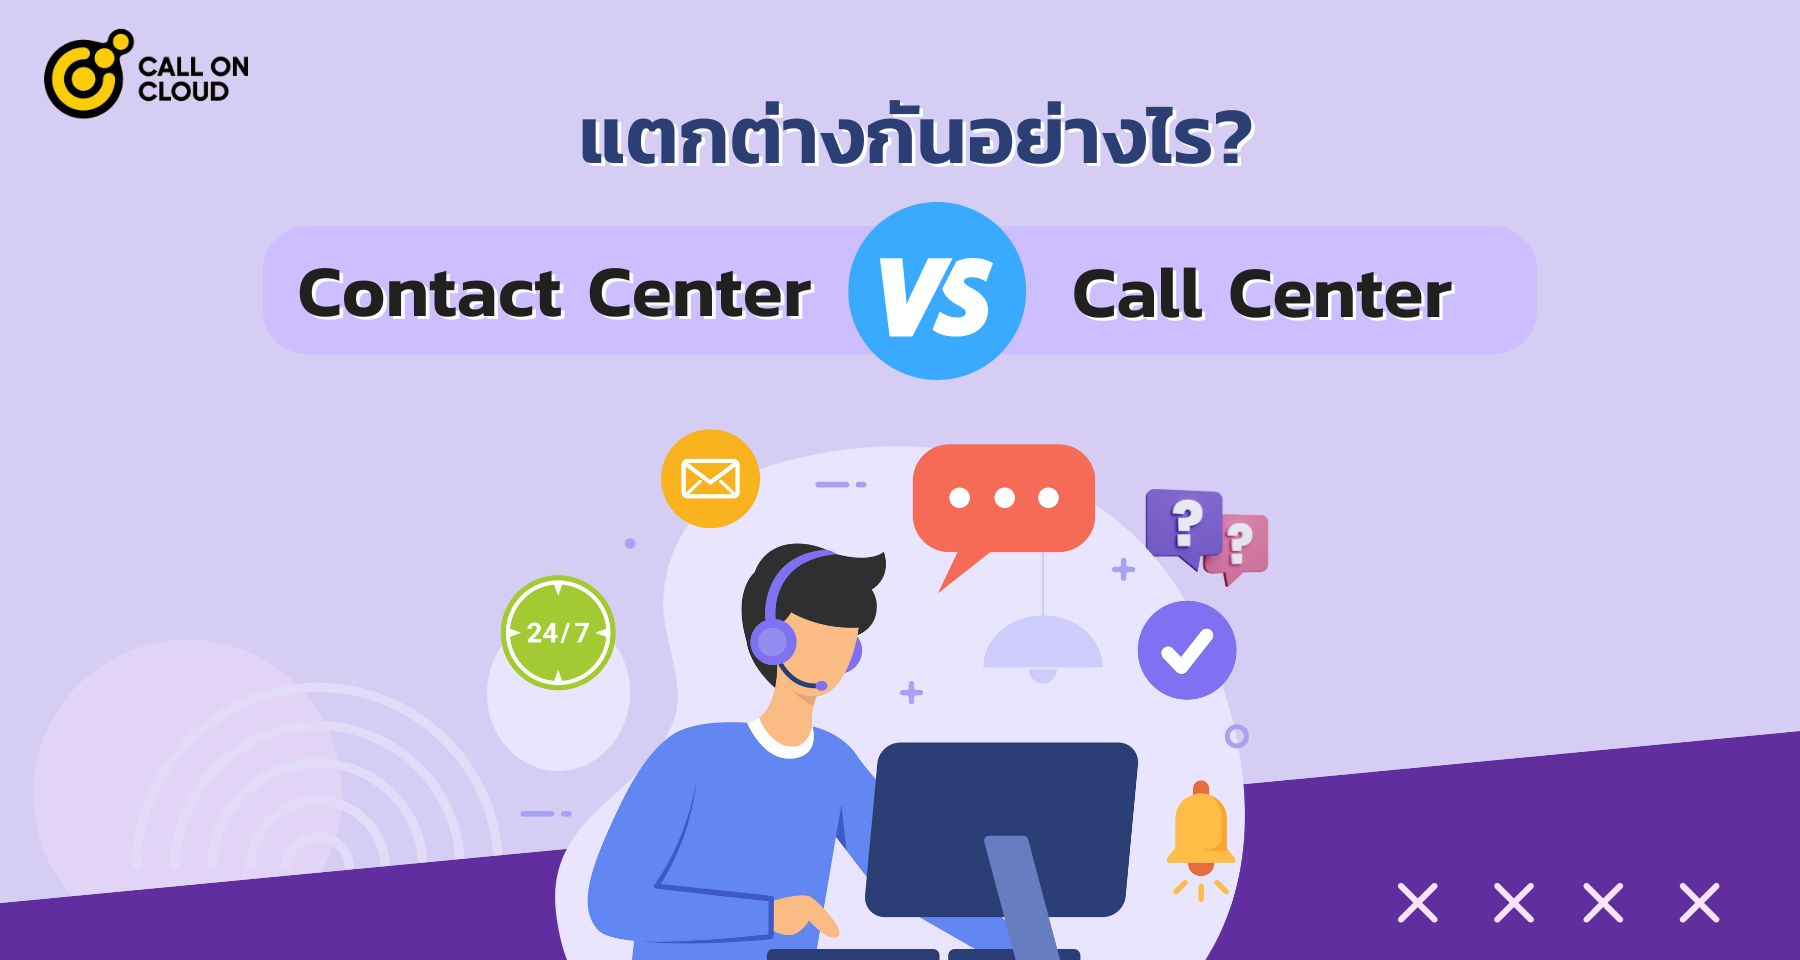 Contact Center และ Call Center แตกต่างกันอย่างไร?